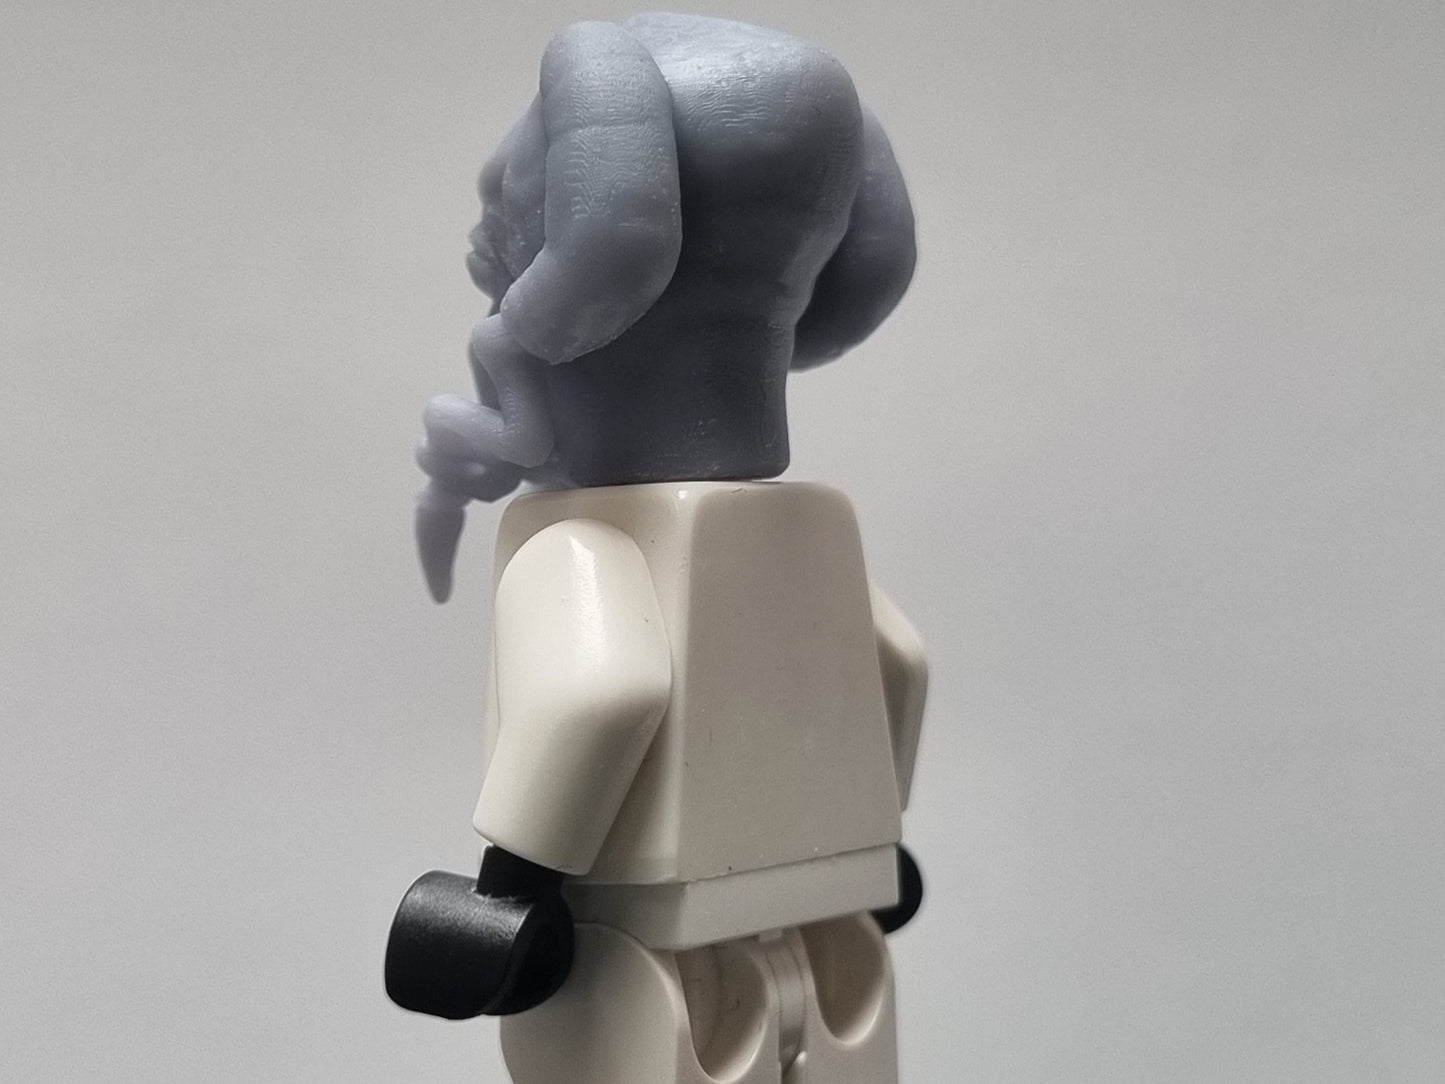 Building toy custom 3D printed galaxy wars alien head!